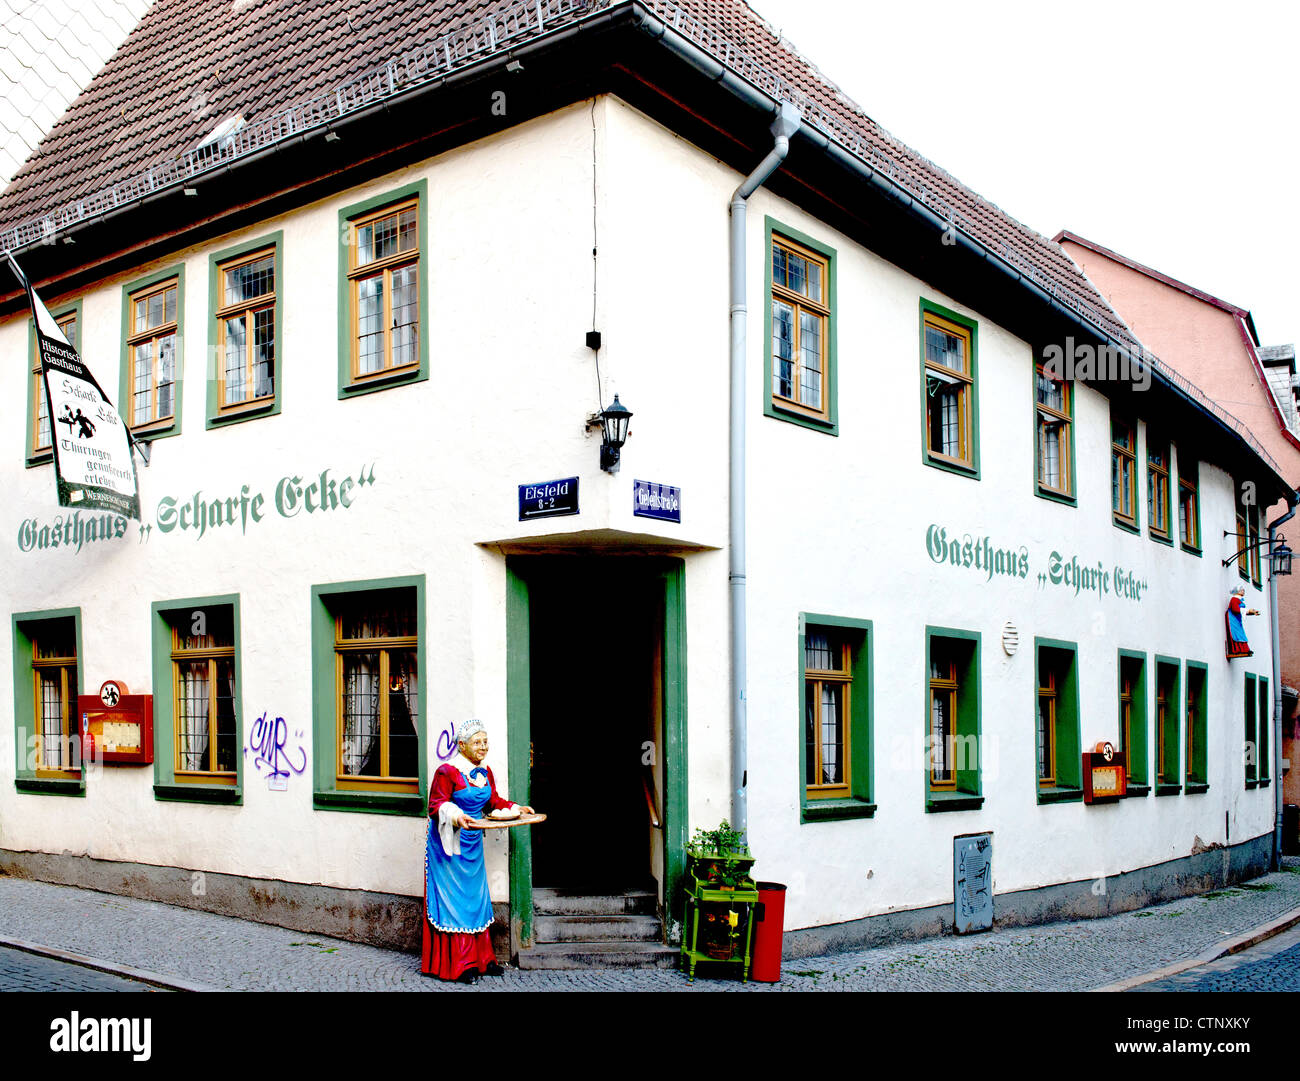 Tavern in Weimar named 'Scharfe Ecke' Stock Photo